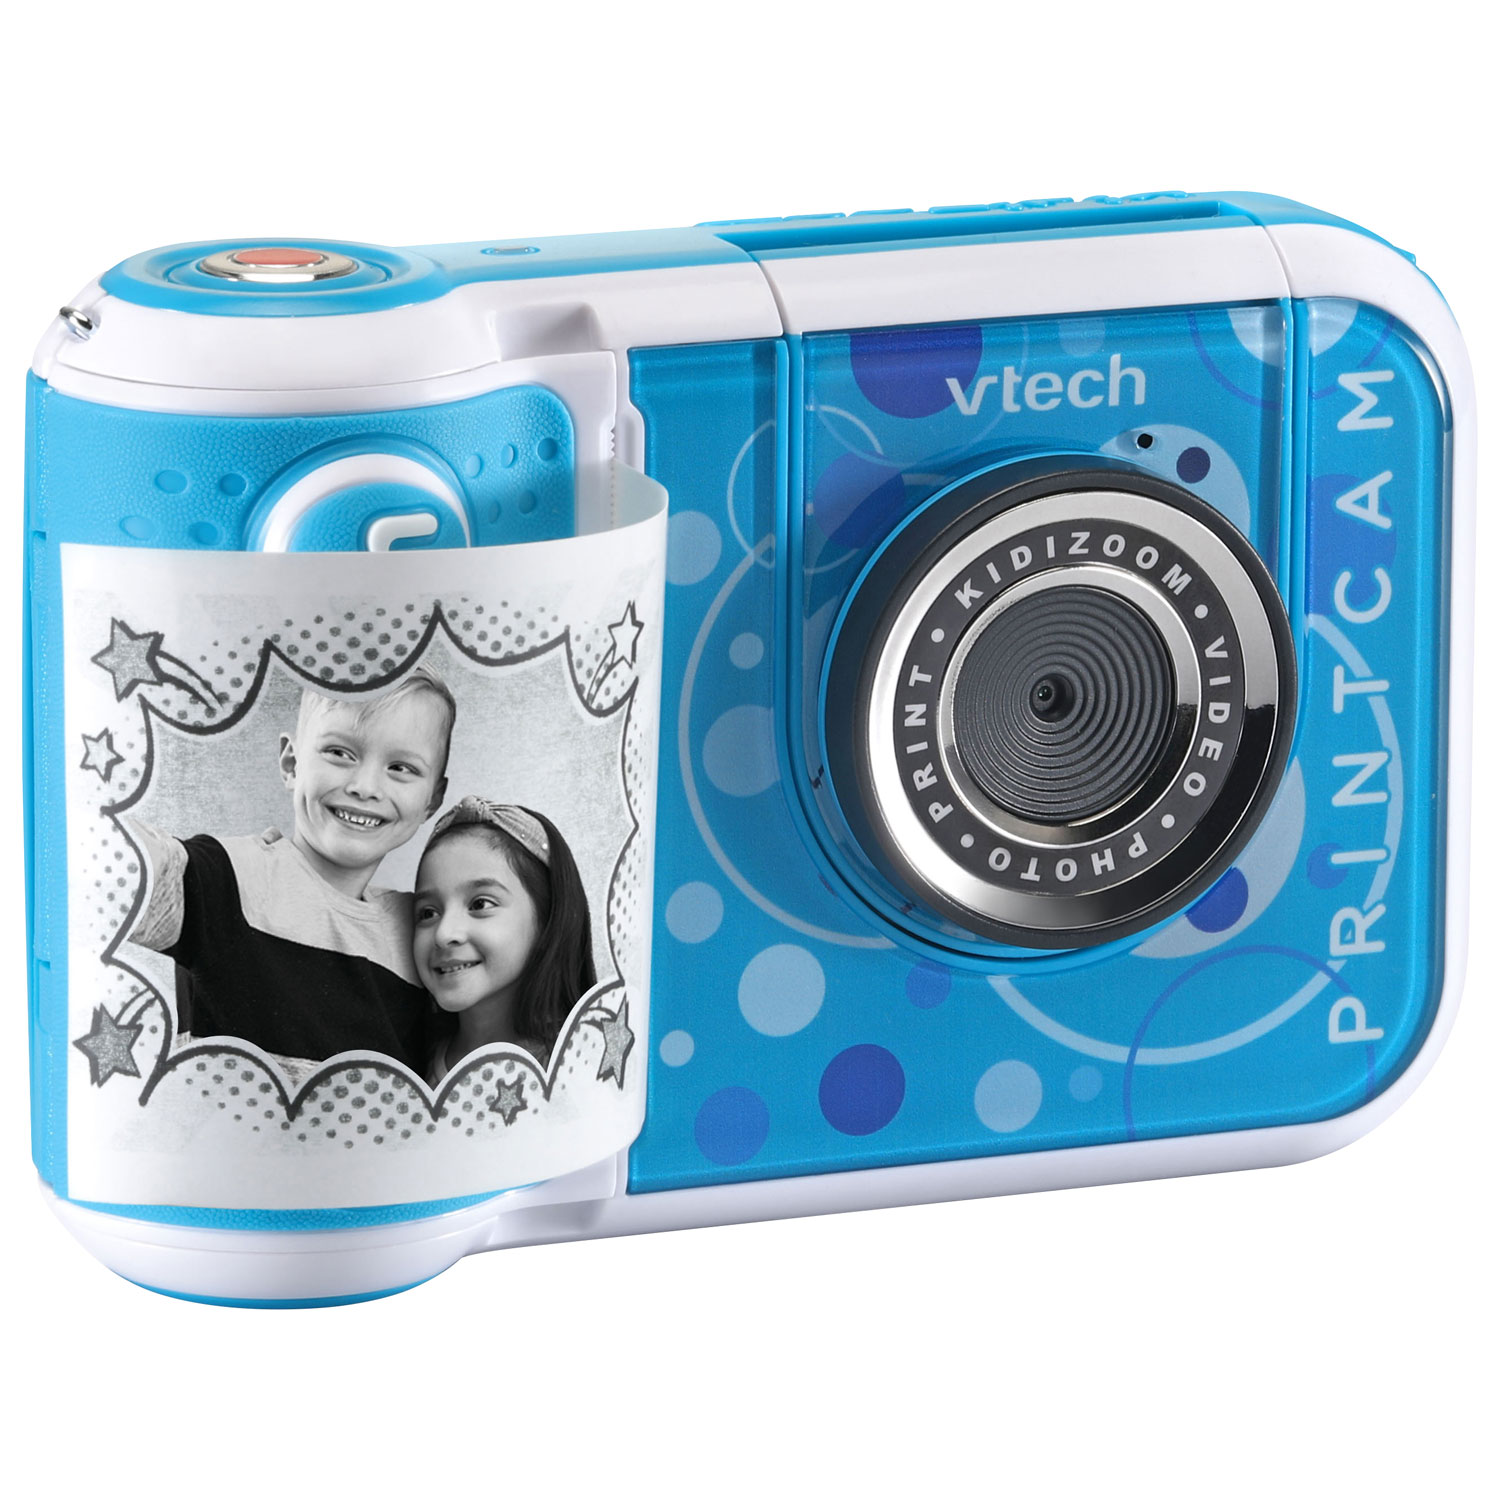 VTech Print Camera $40.32 Shipped